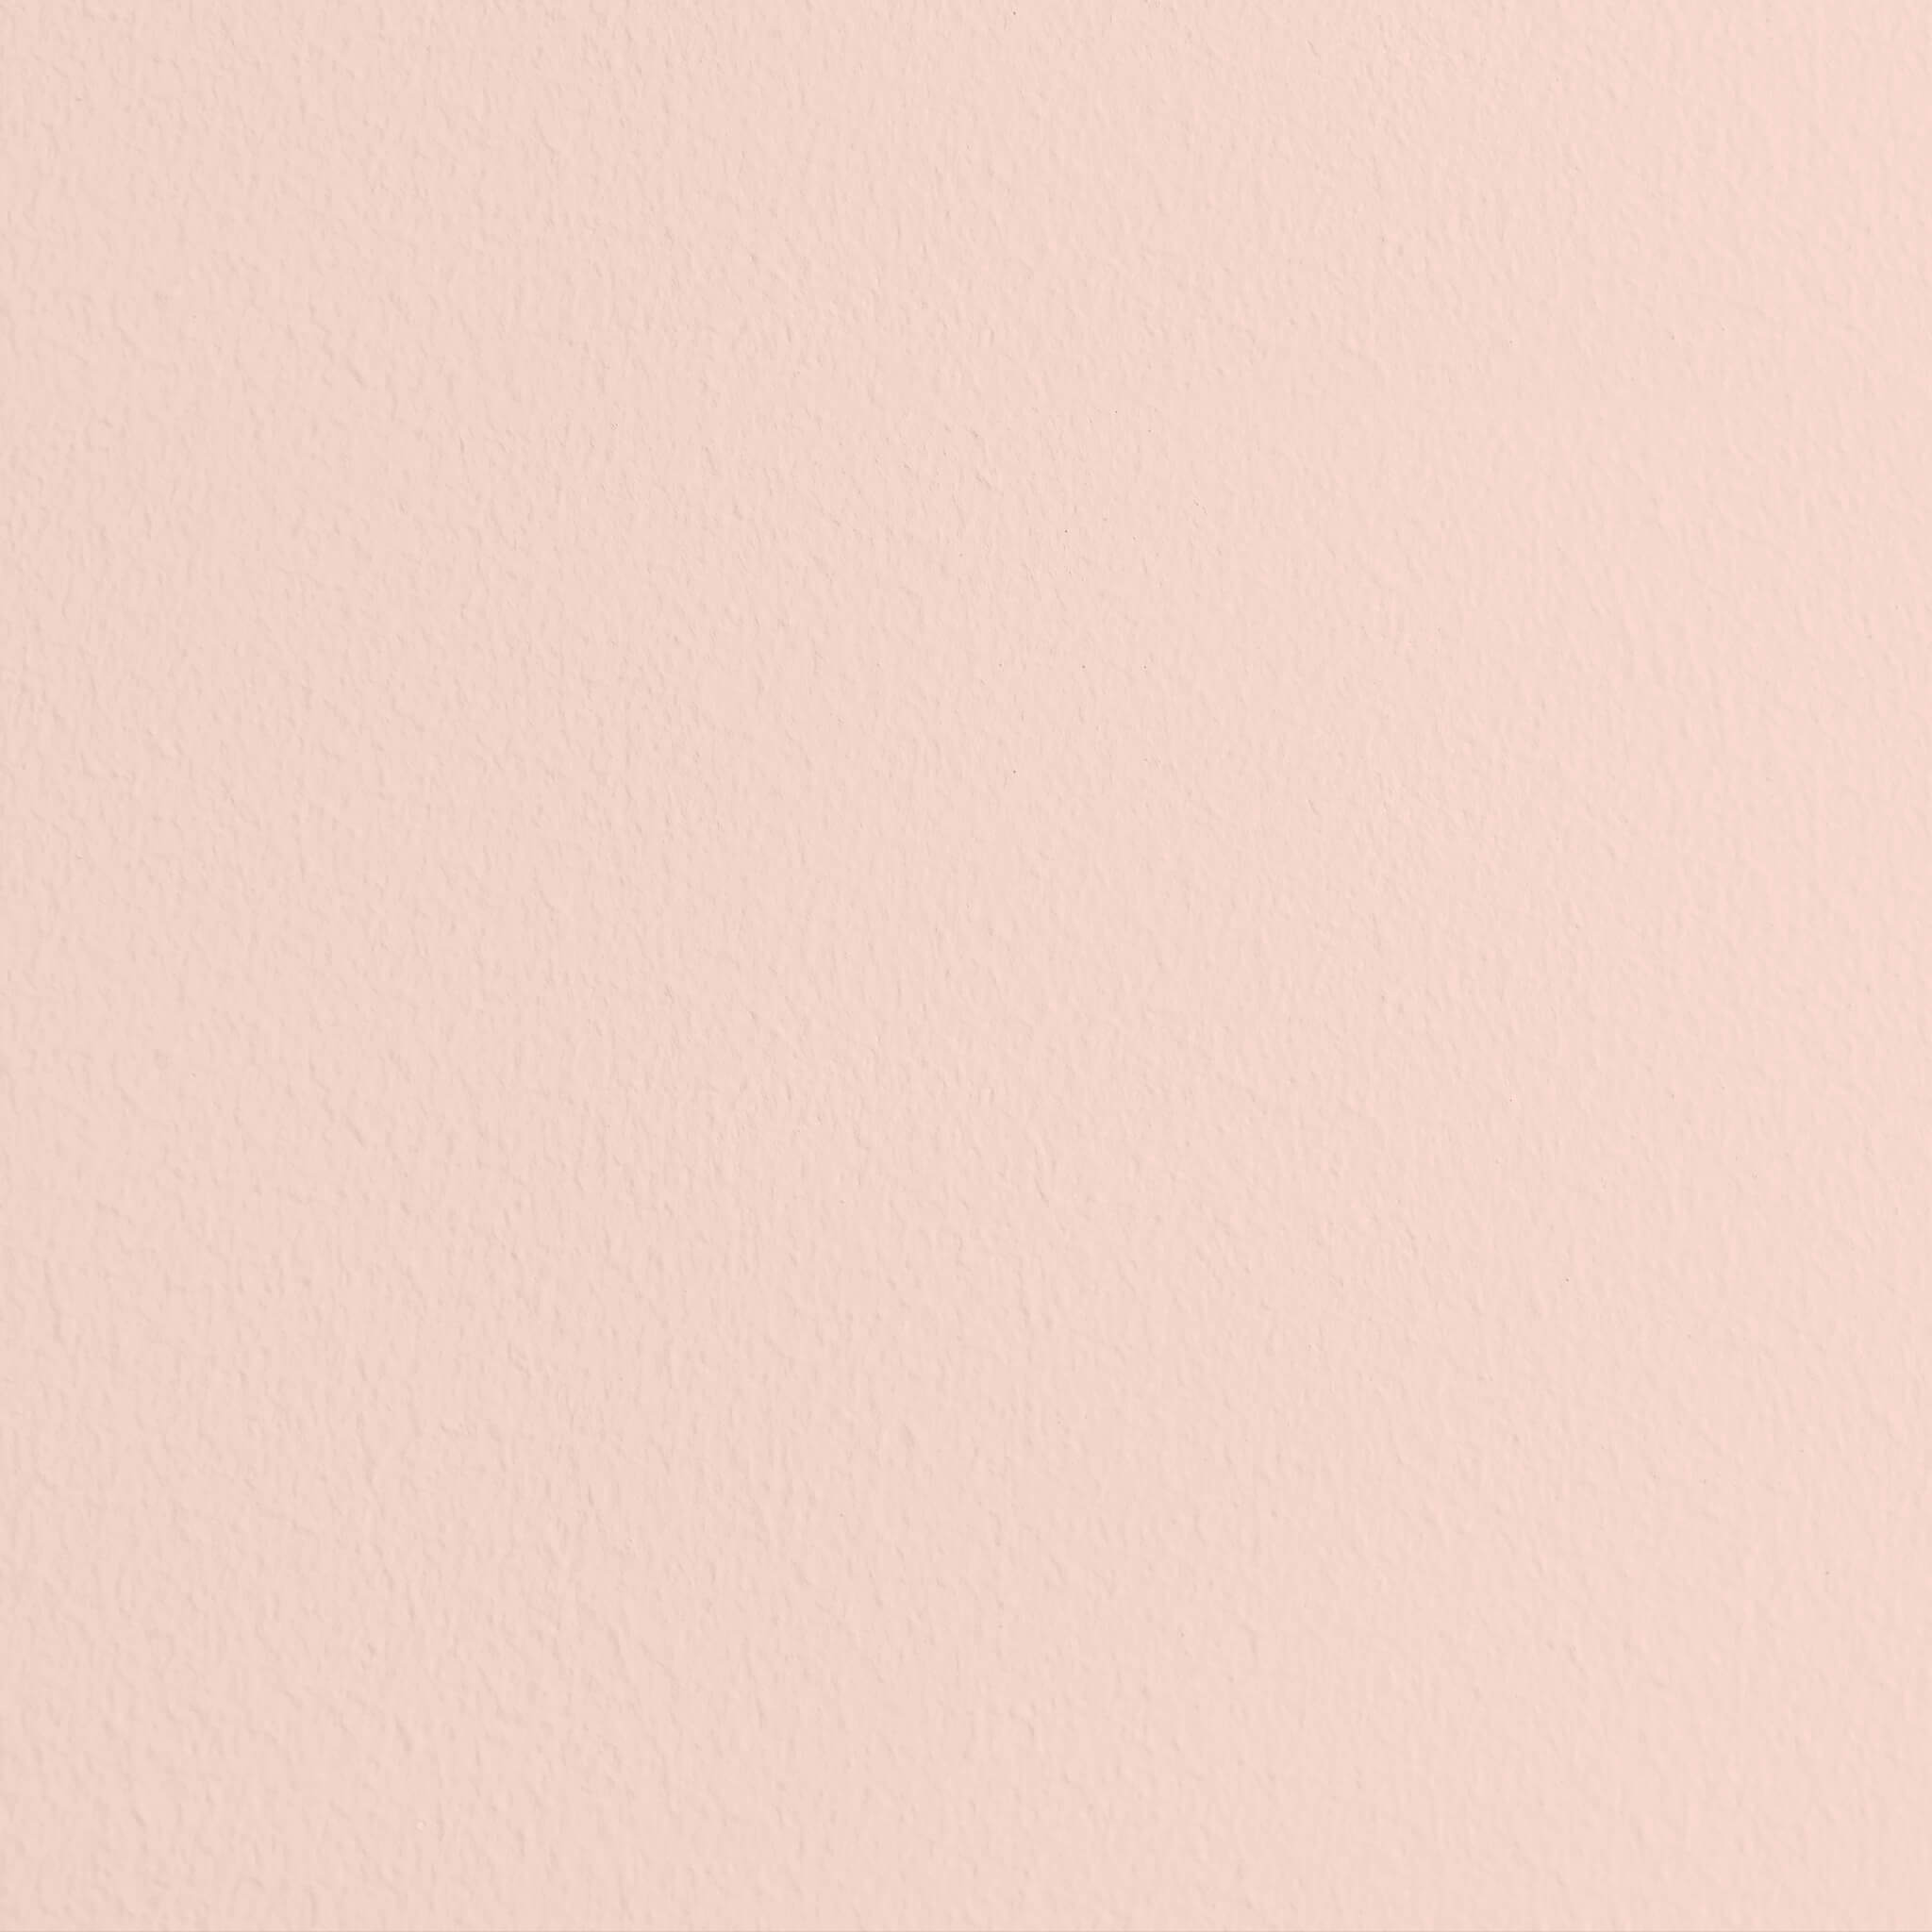 Mylands Palmerston Pink No. 243 - Marble Matt Emulsion / Wandfarbe, 5L